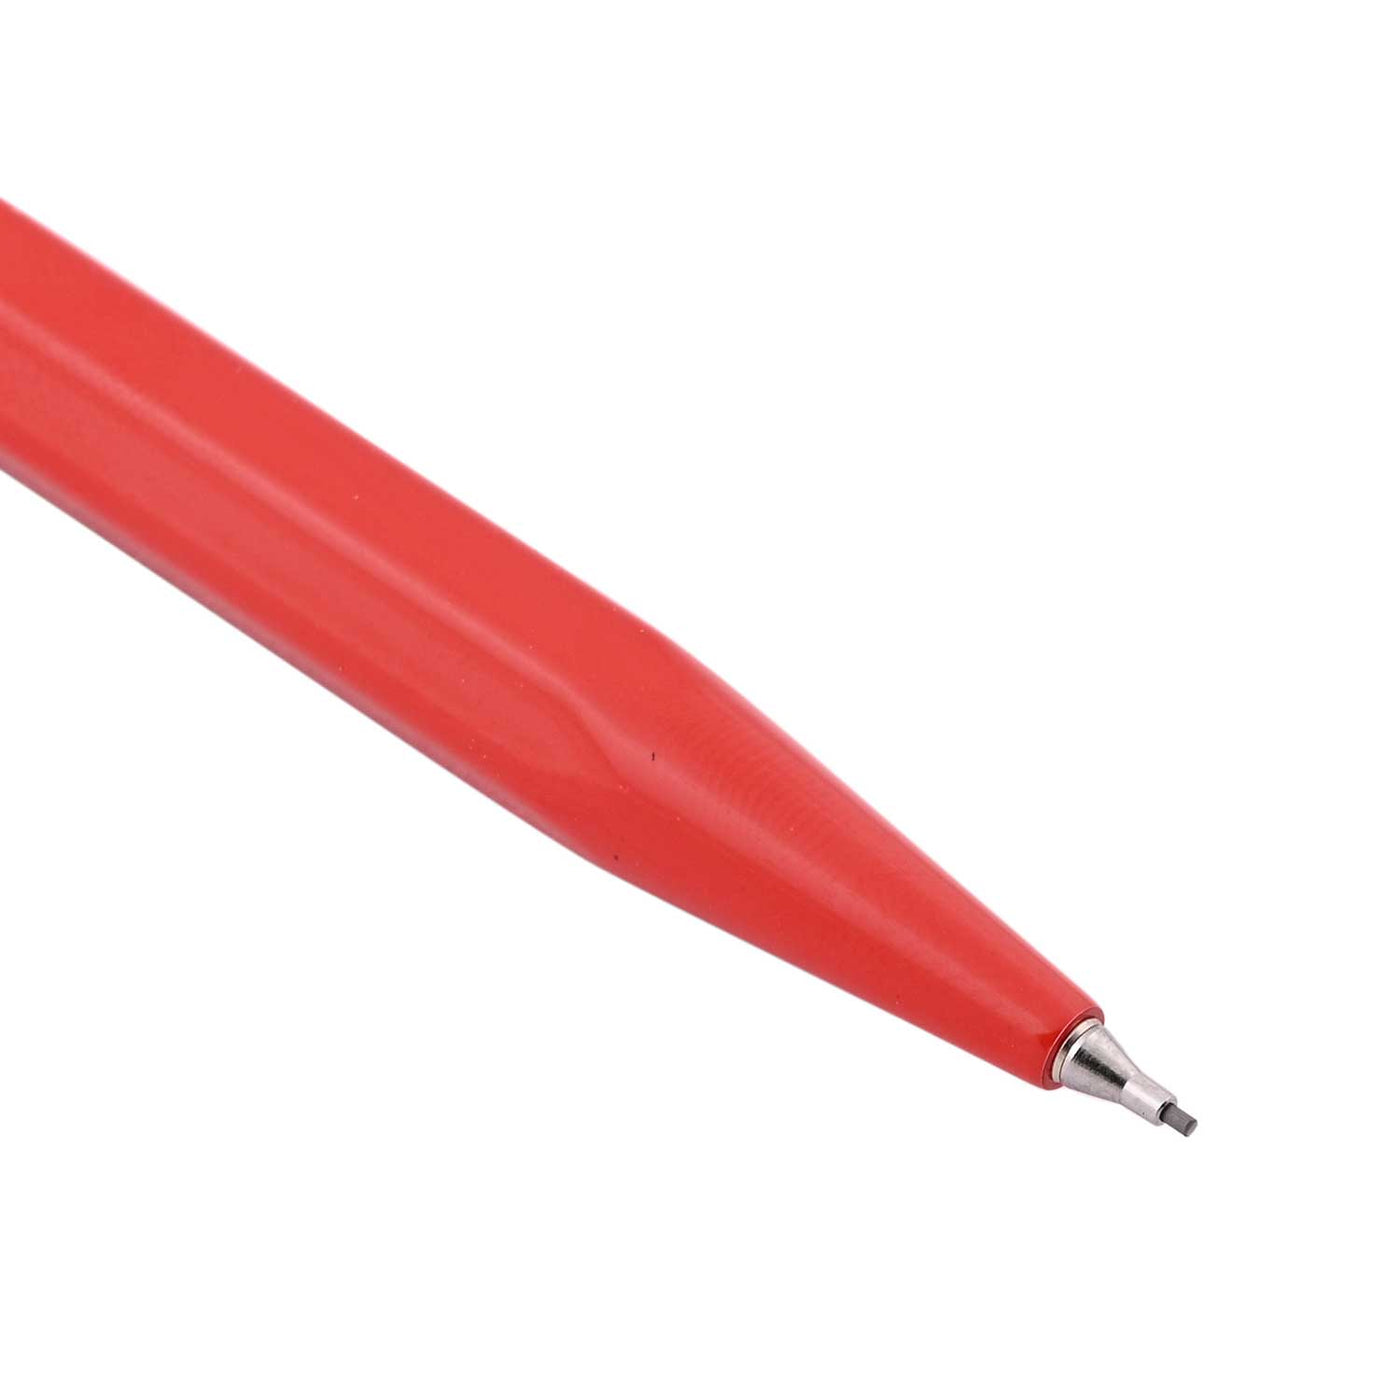 Caran d'Ache 849 Classic 0.7mm Mechanical Pencil - Red 2